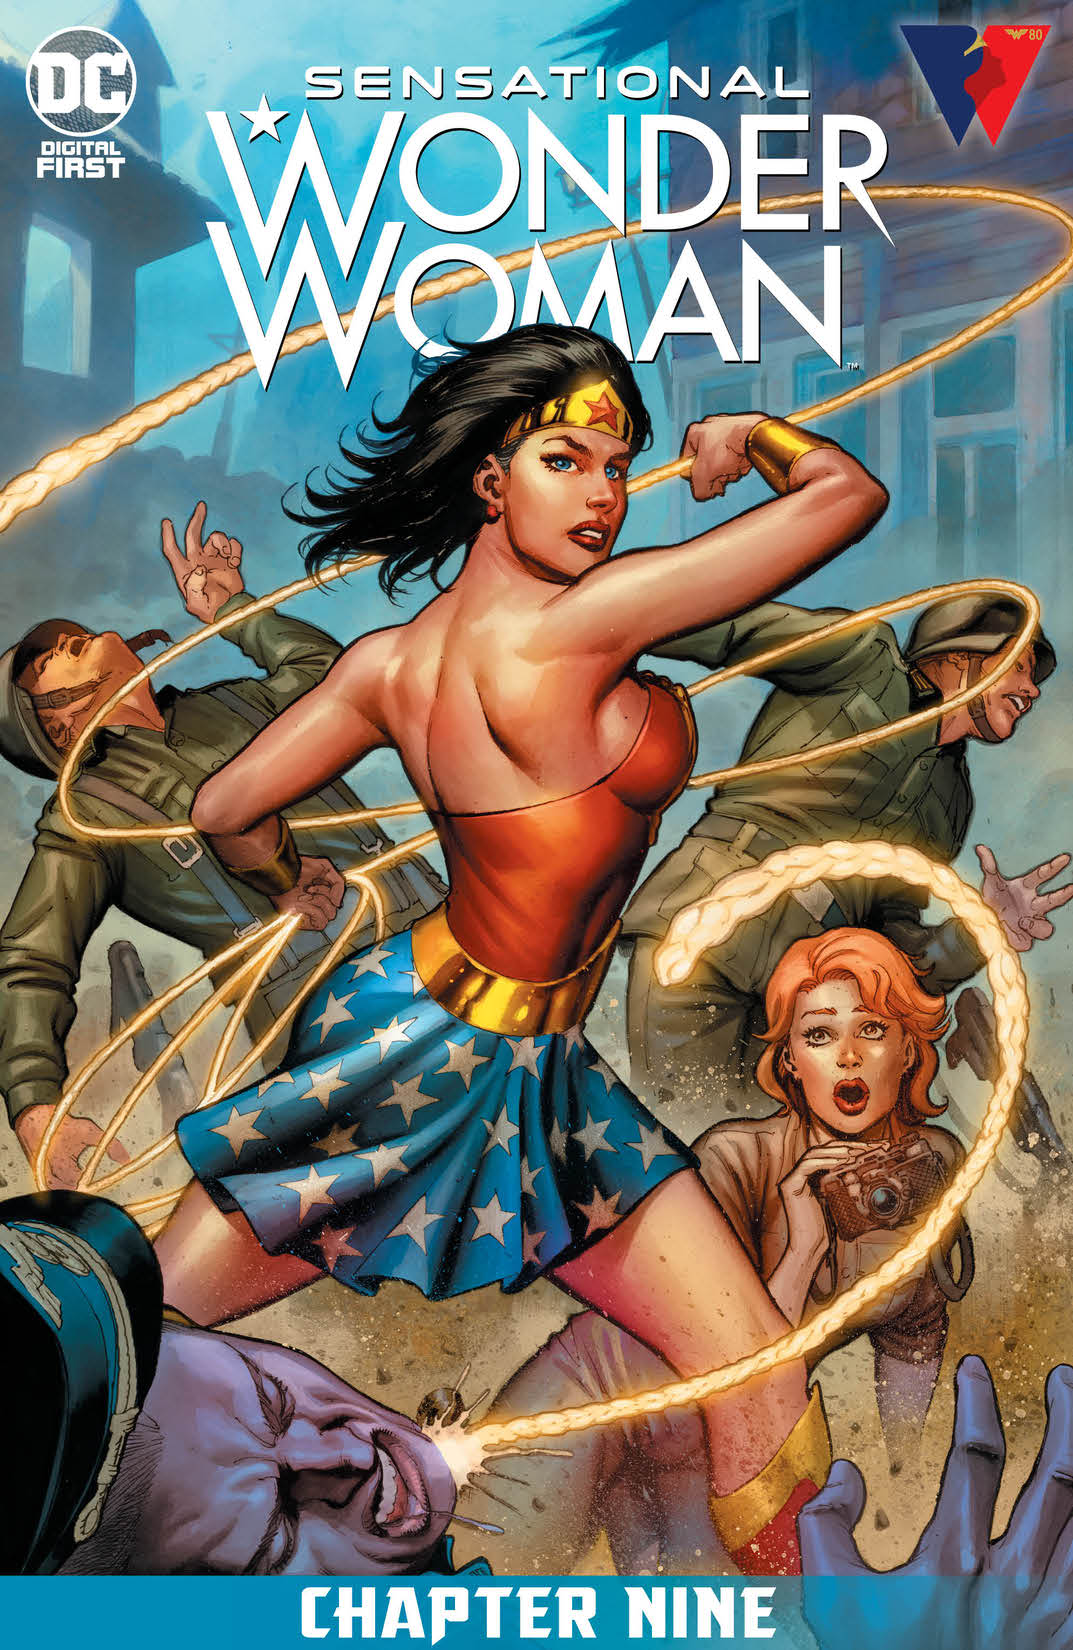 Sensational Wonder Woman #9 preview images